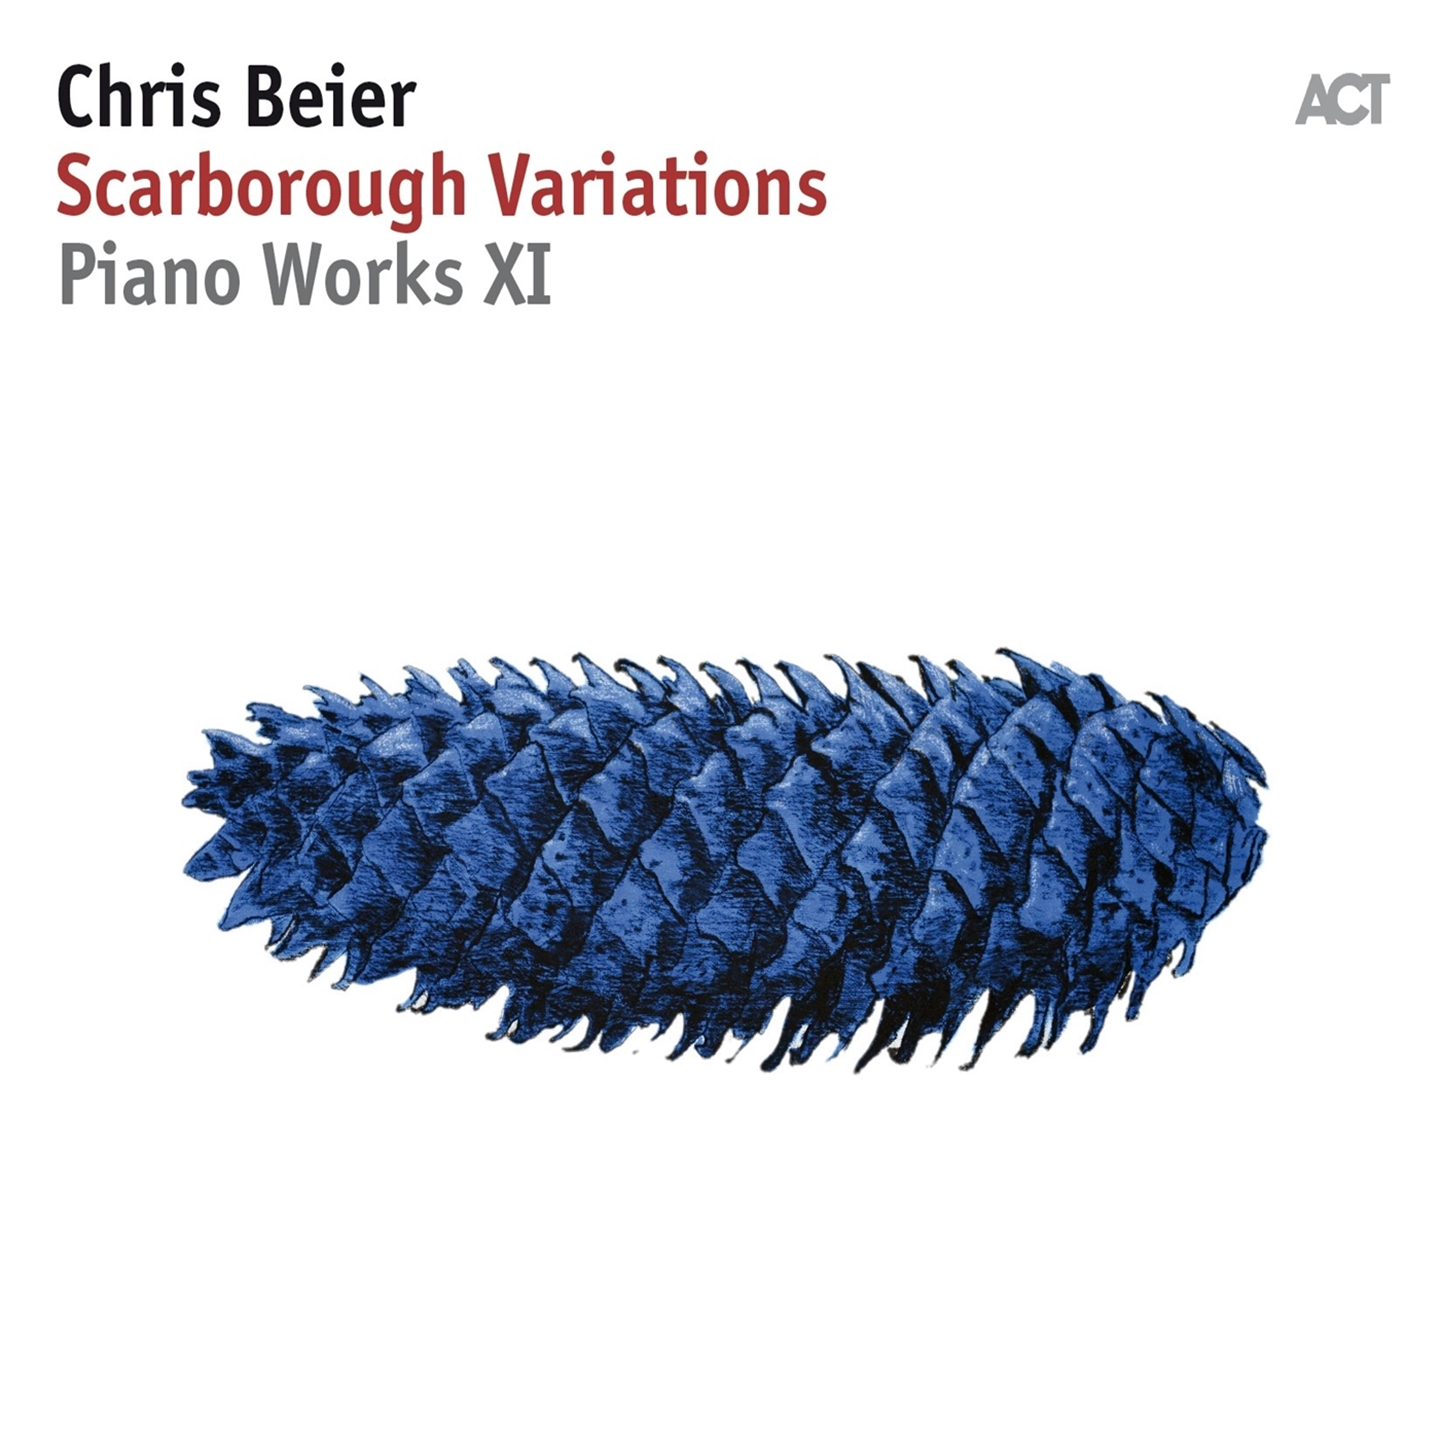 Chris Beier - Scarborough Variations - Photo 1/1